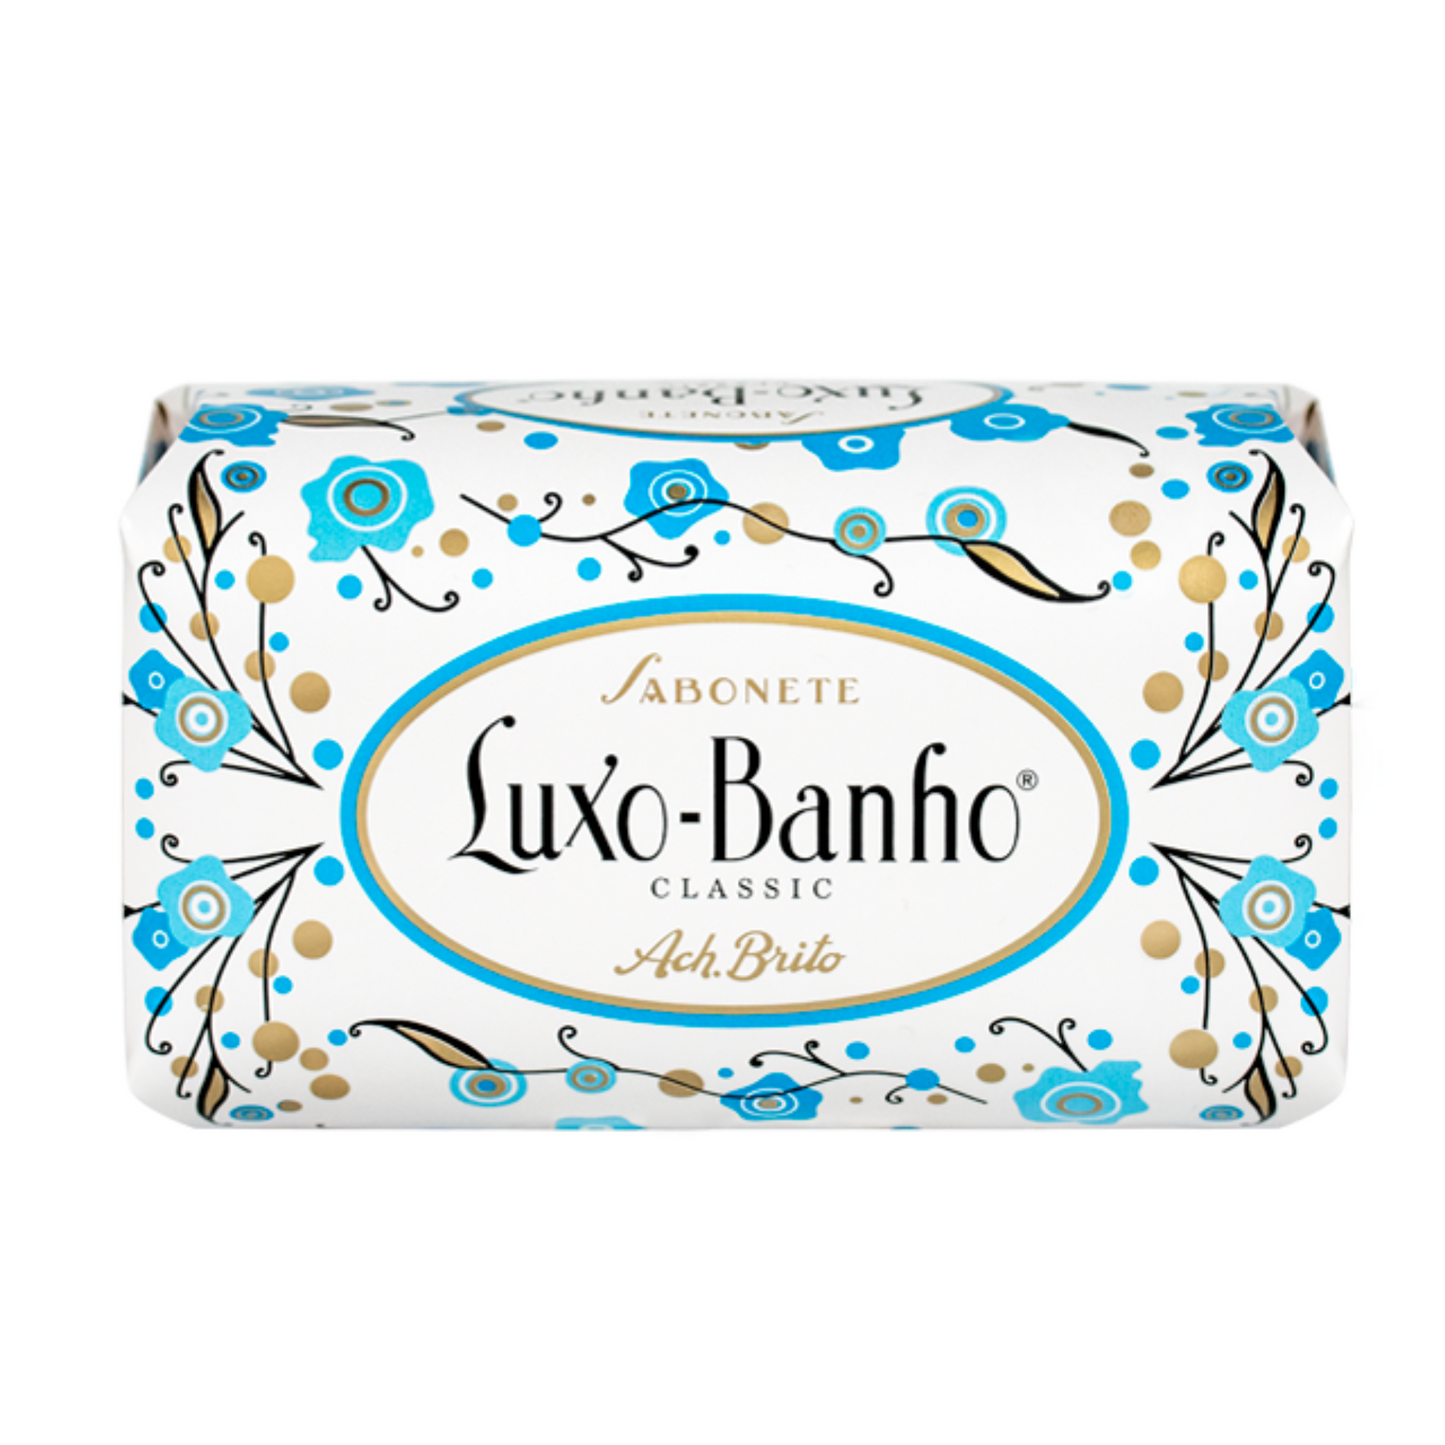 Primary image of Luxo-Banho Classic soap